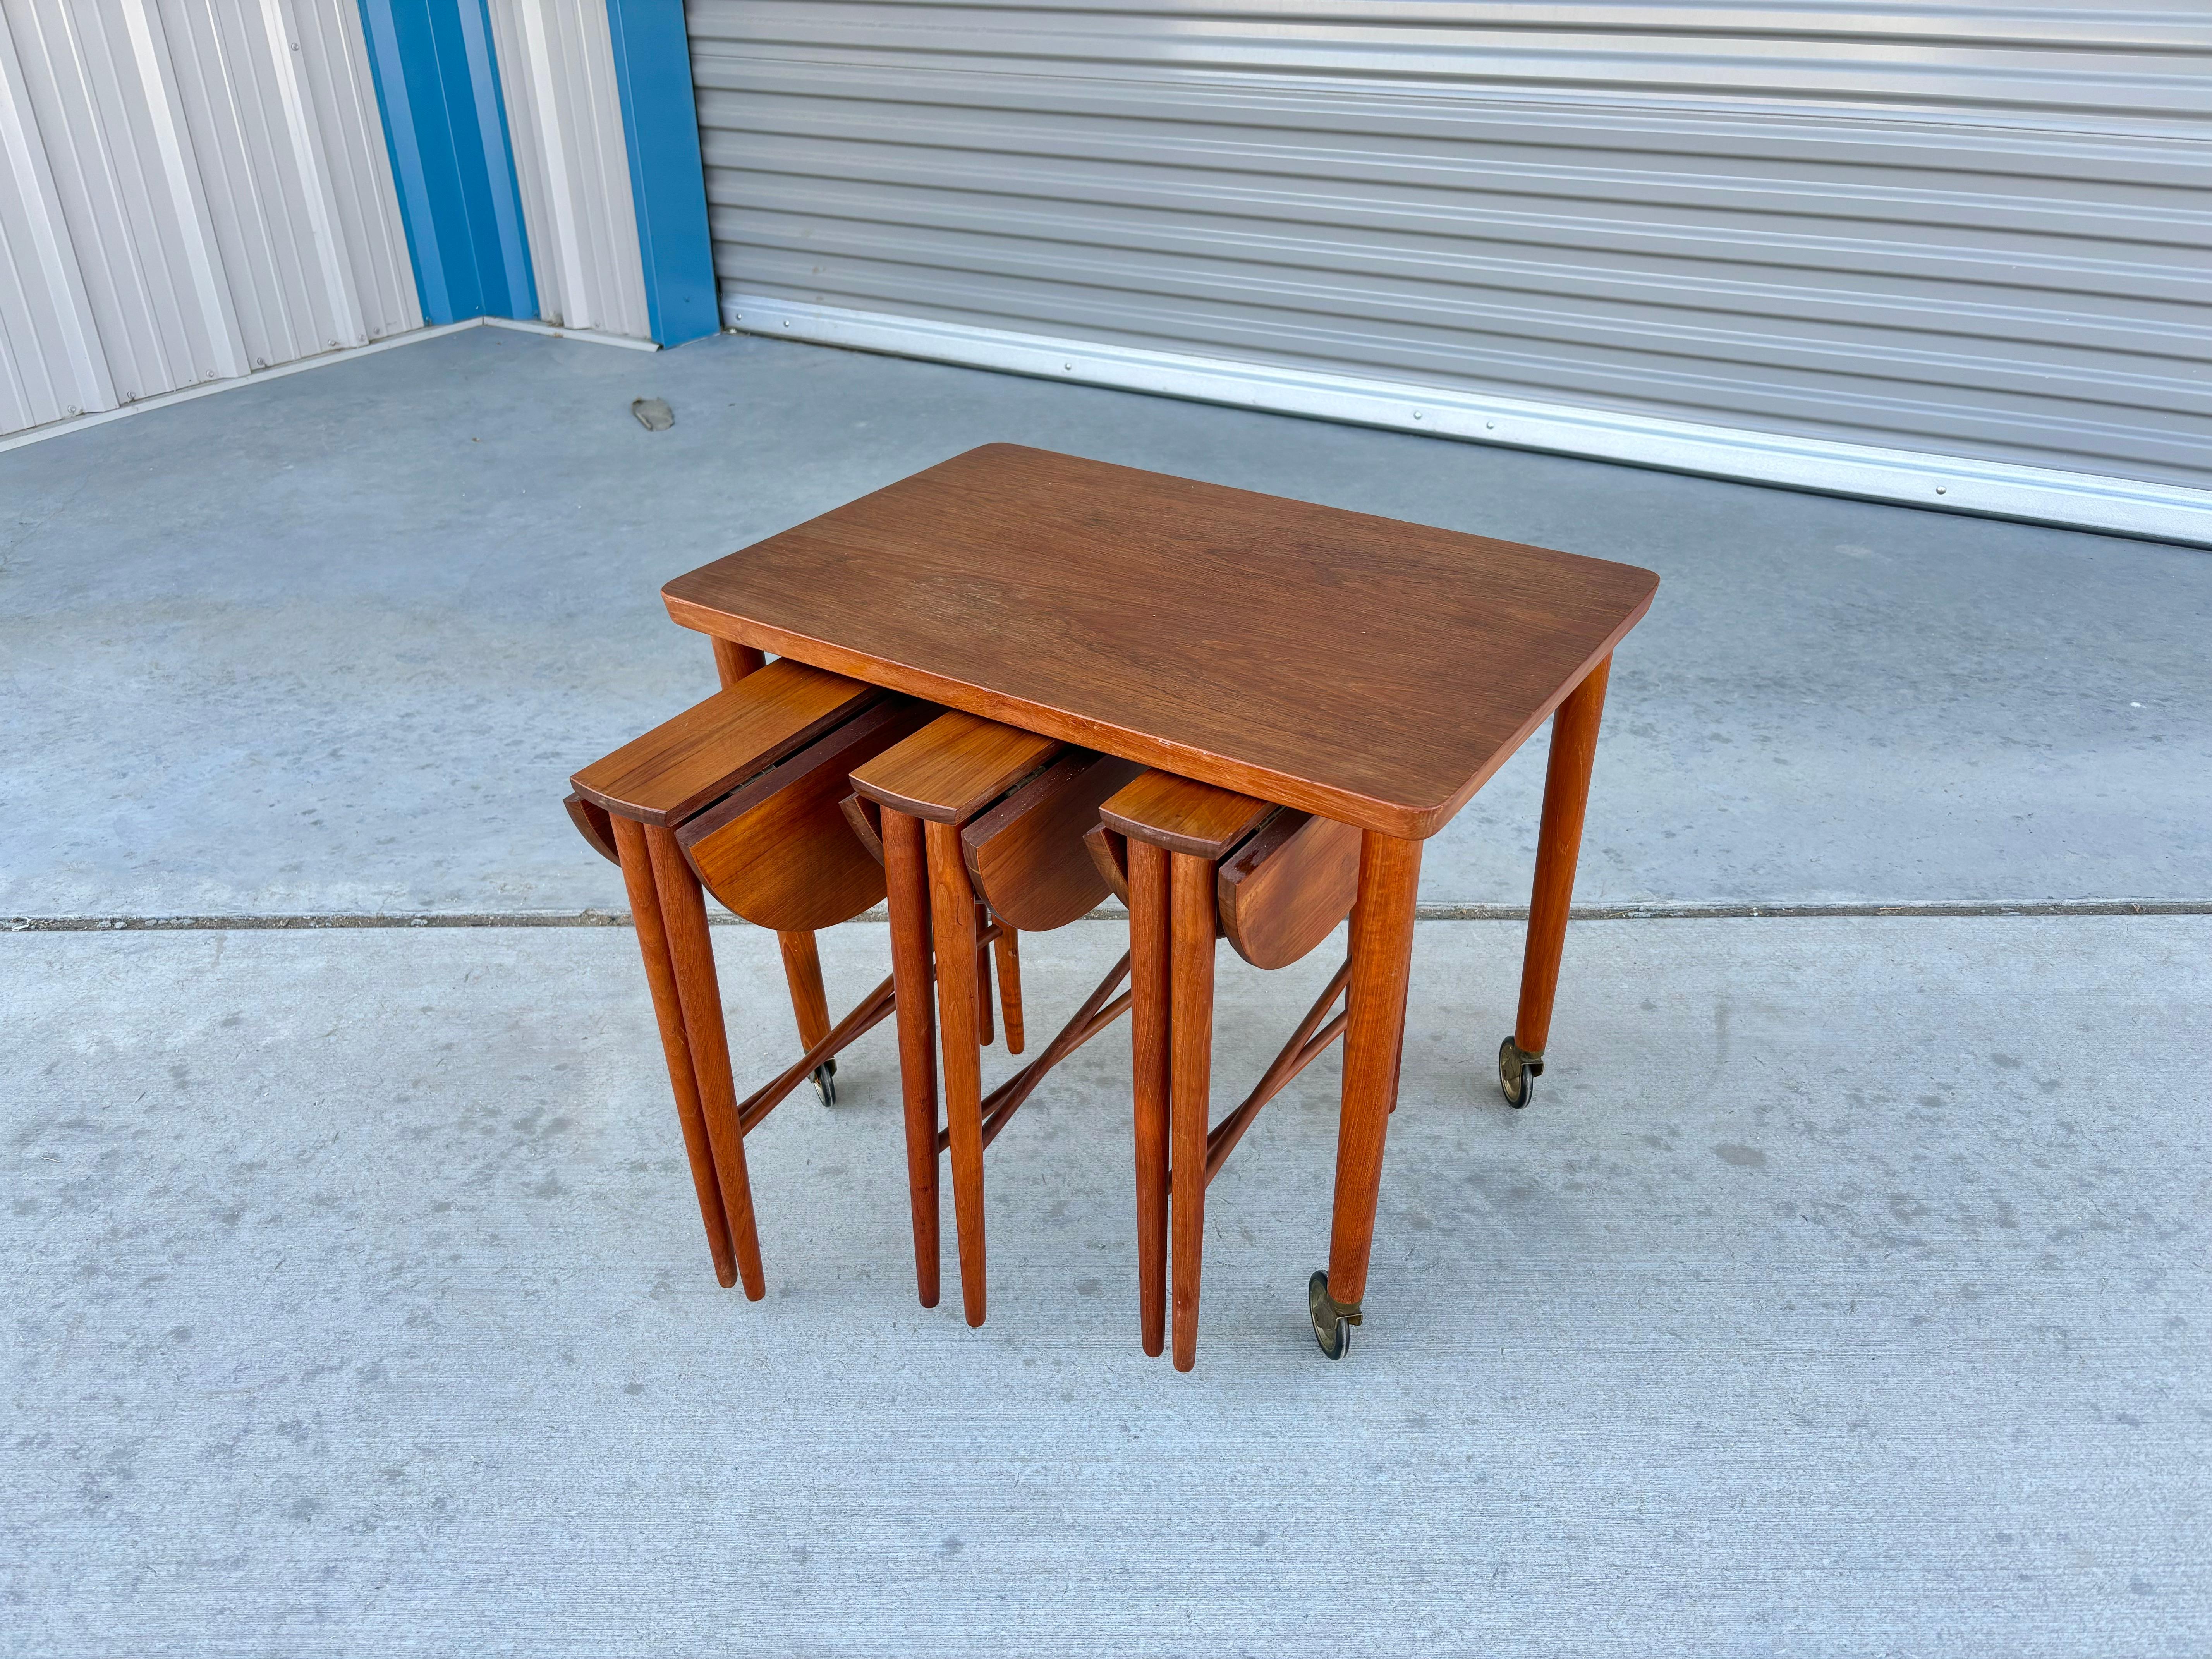 Mid-Century Modern 1960s Danish Modern Teak Nesting Tables by Paul Hundevad - a Pair For Sale